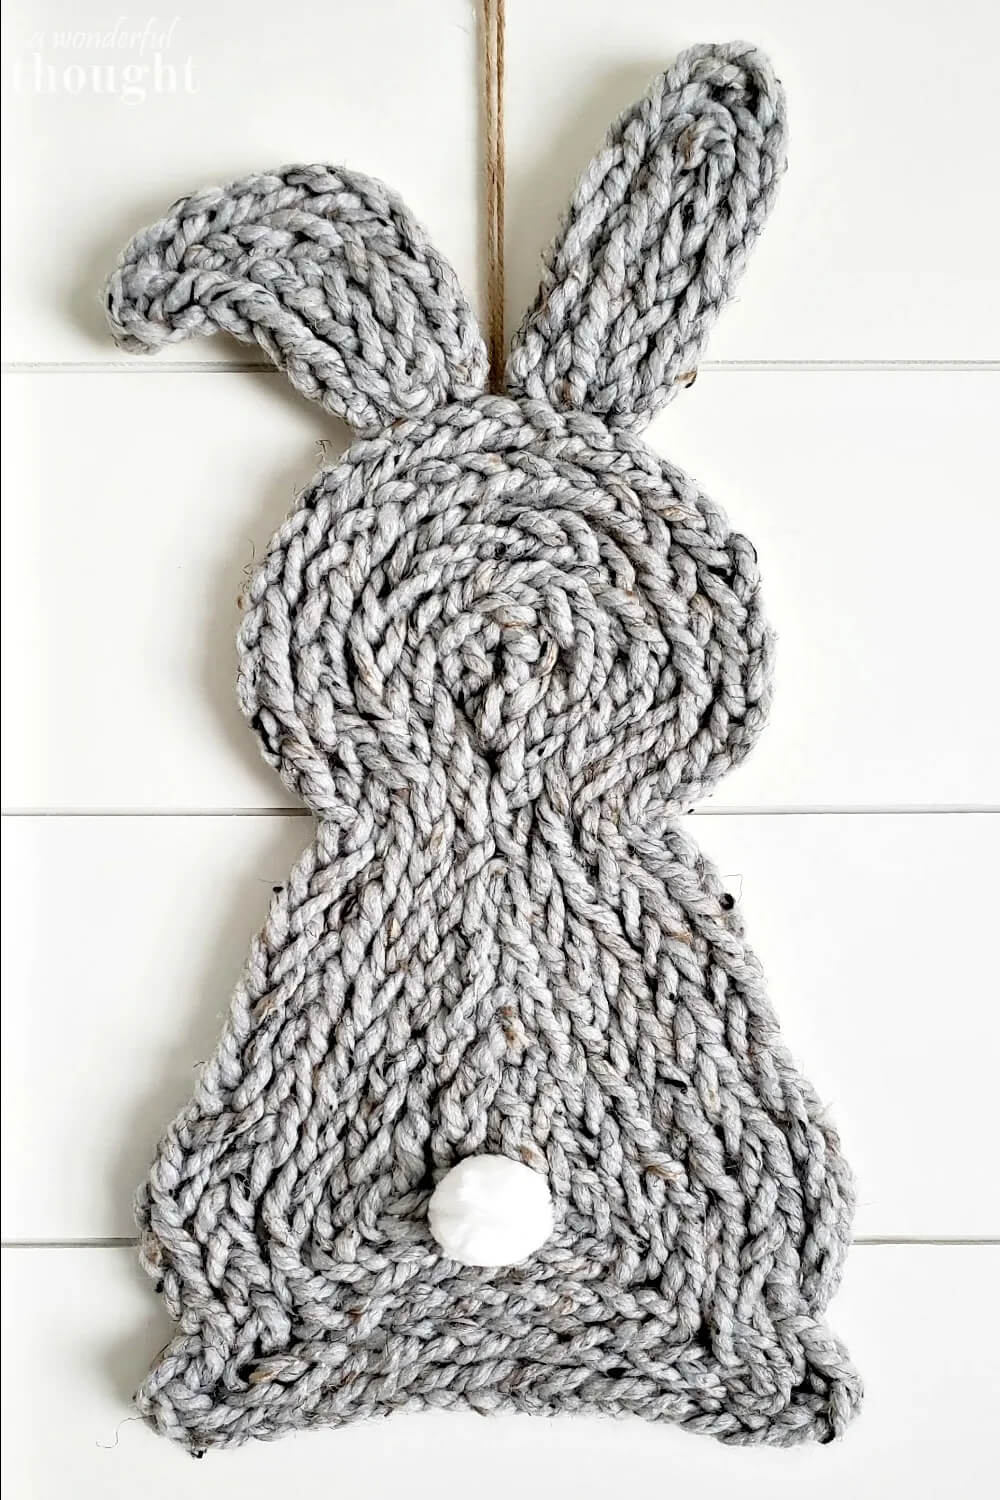 Adorable Yarn Rabit Craft Idea By Finger Knitting